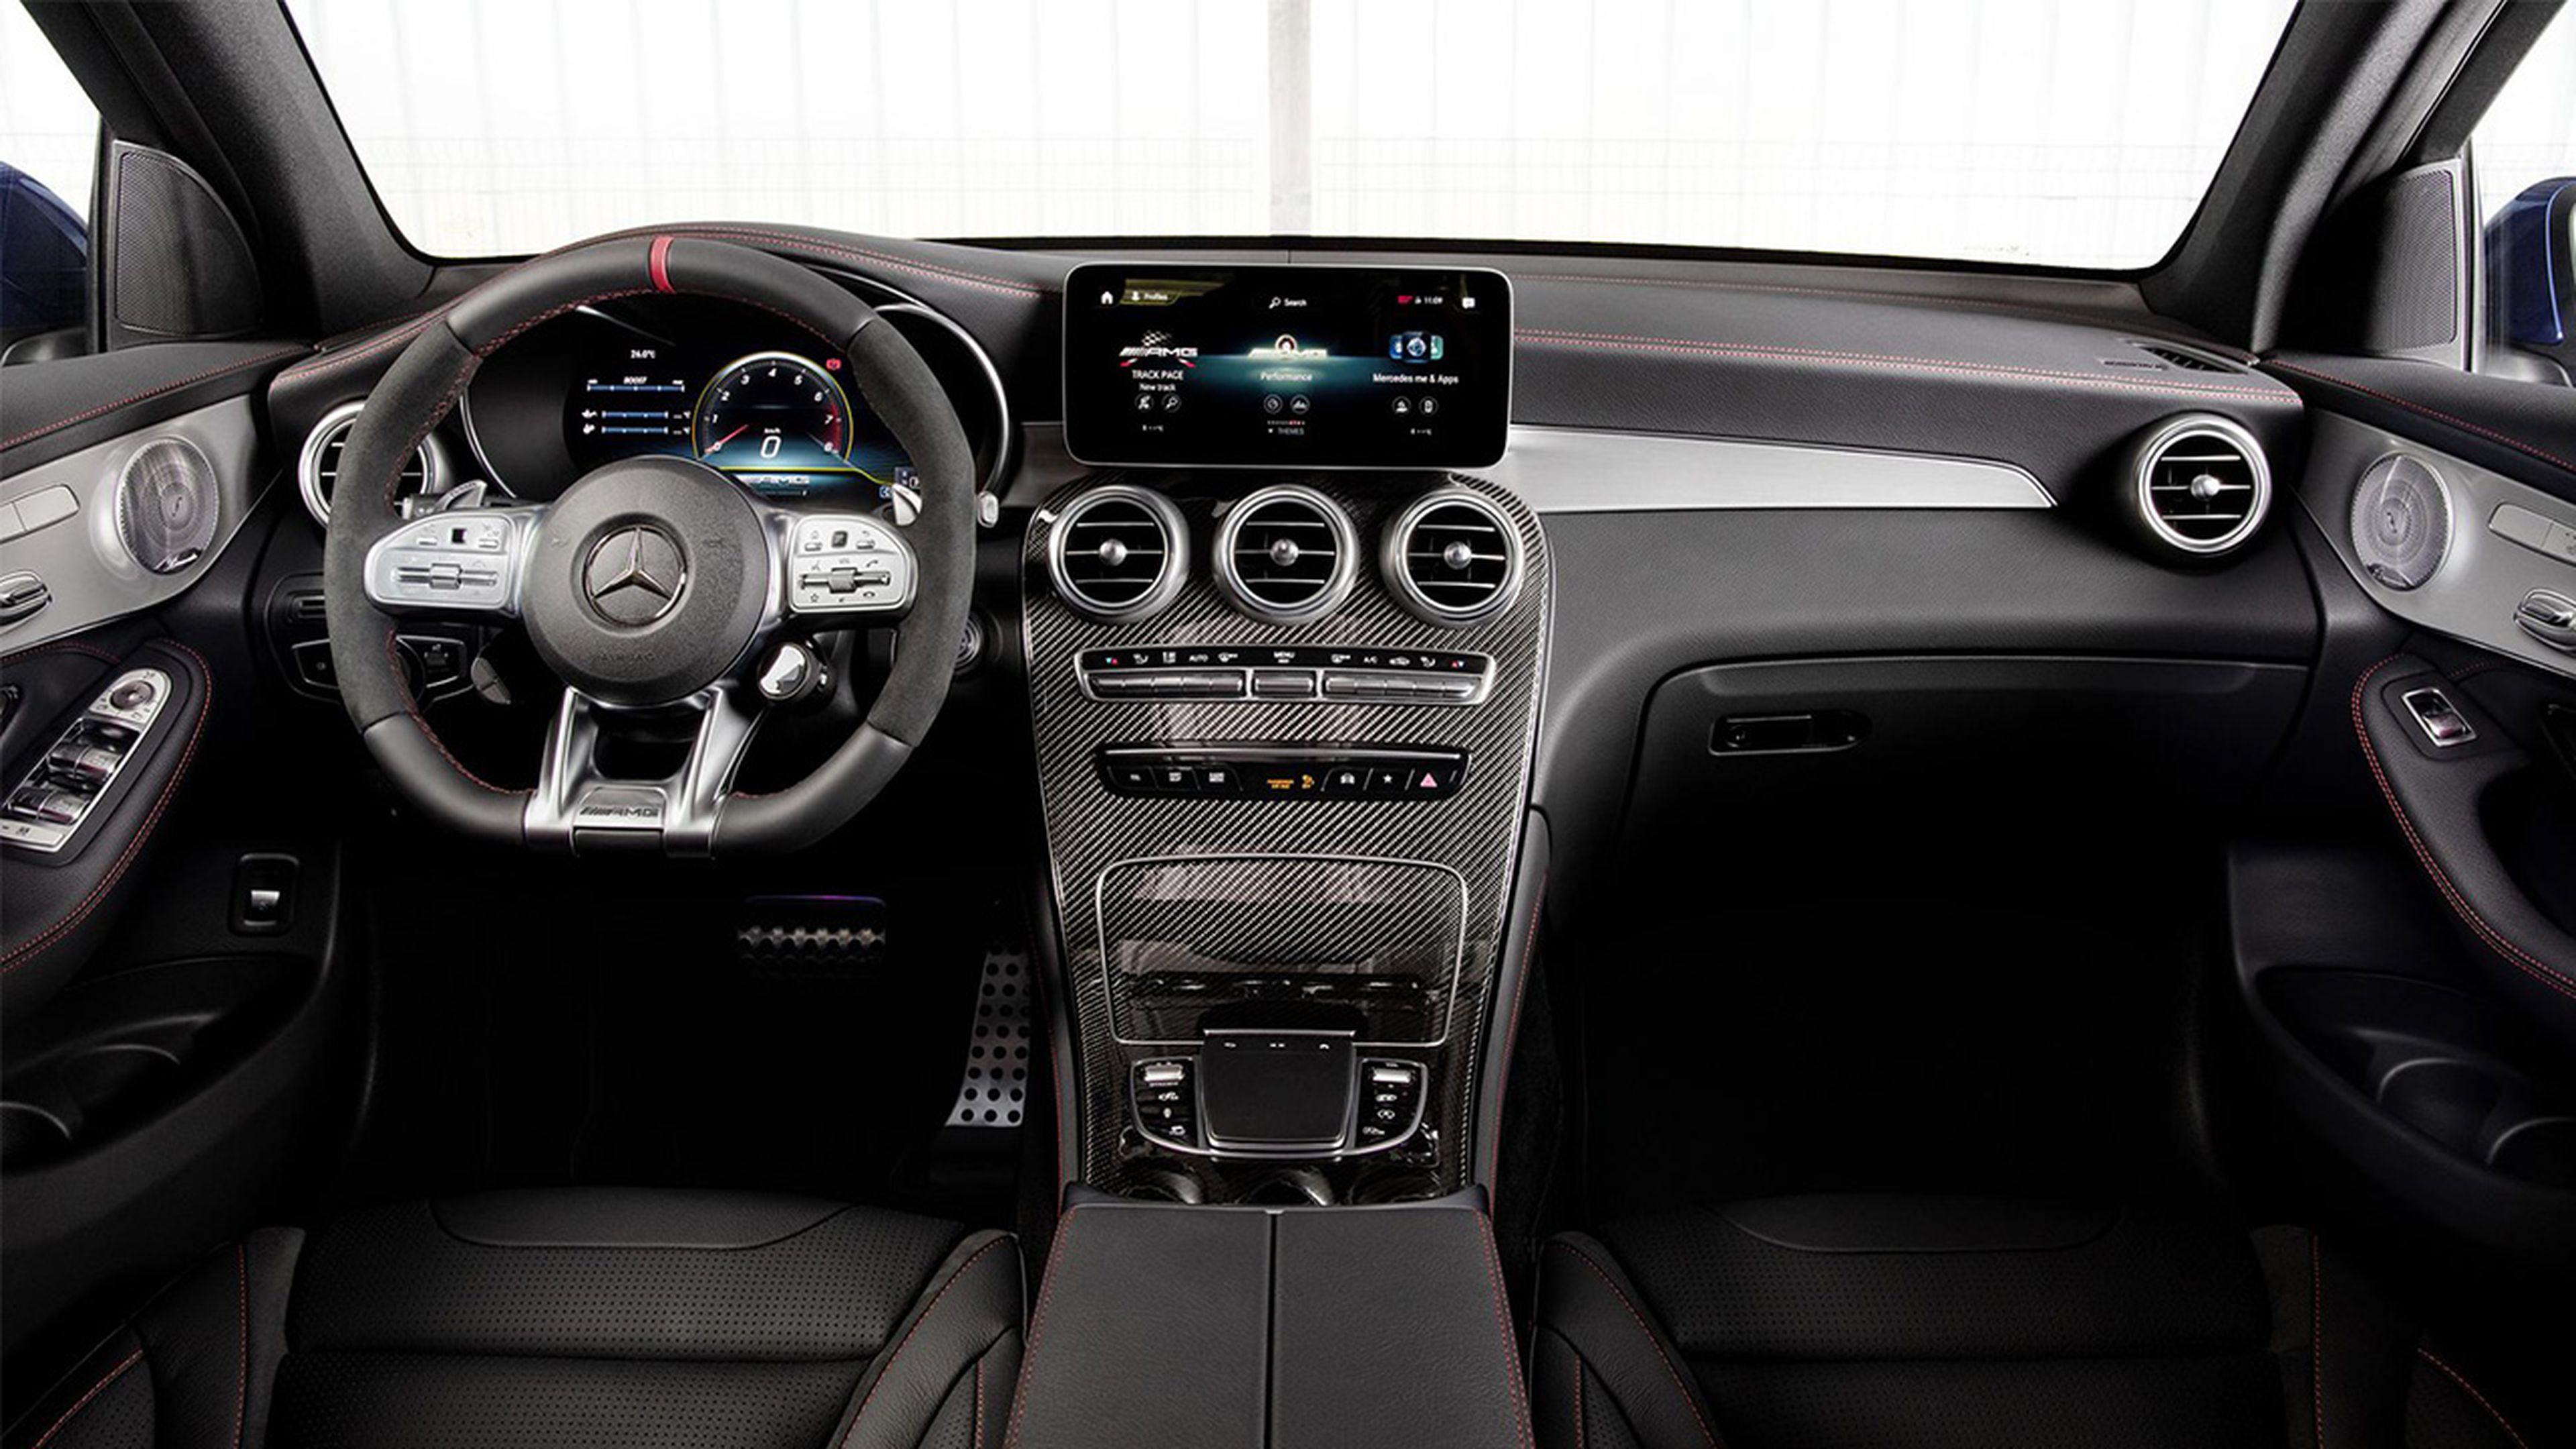 Mercedes-AMG GLC 43 interior